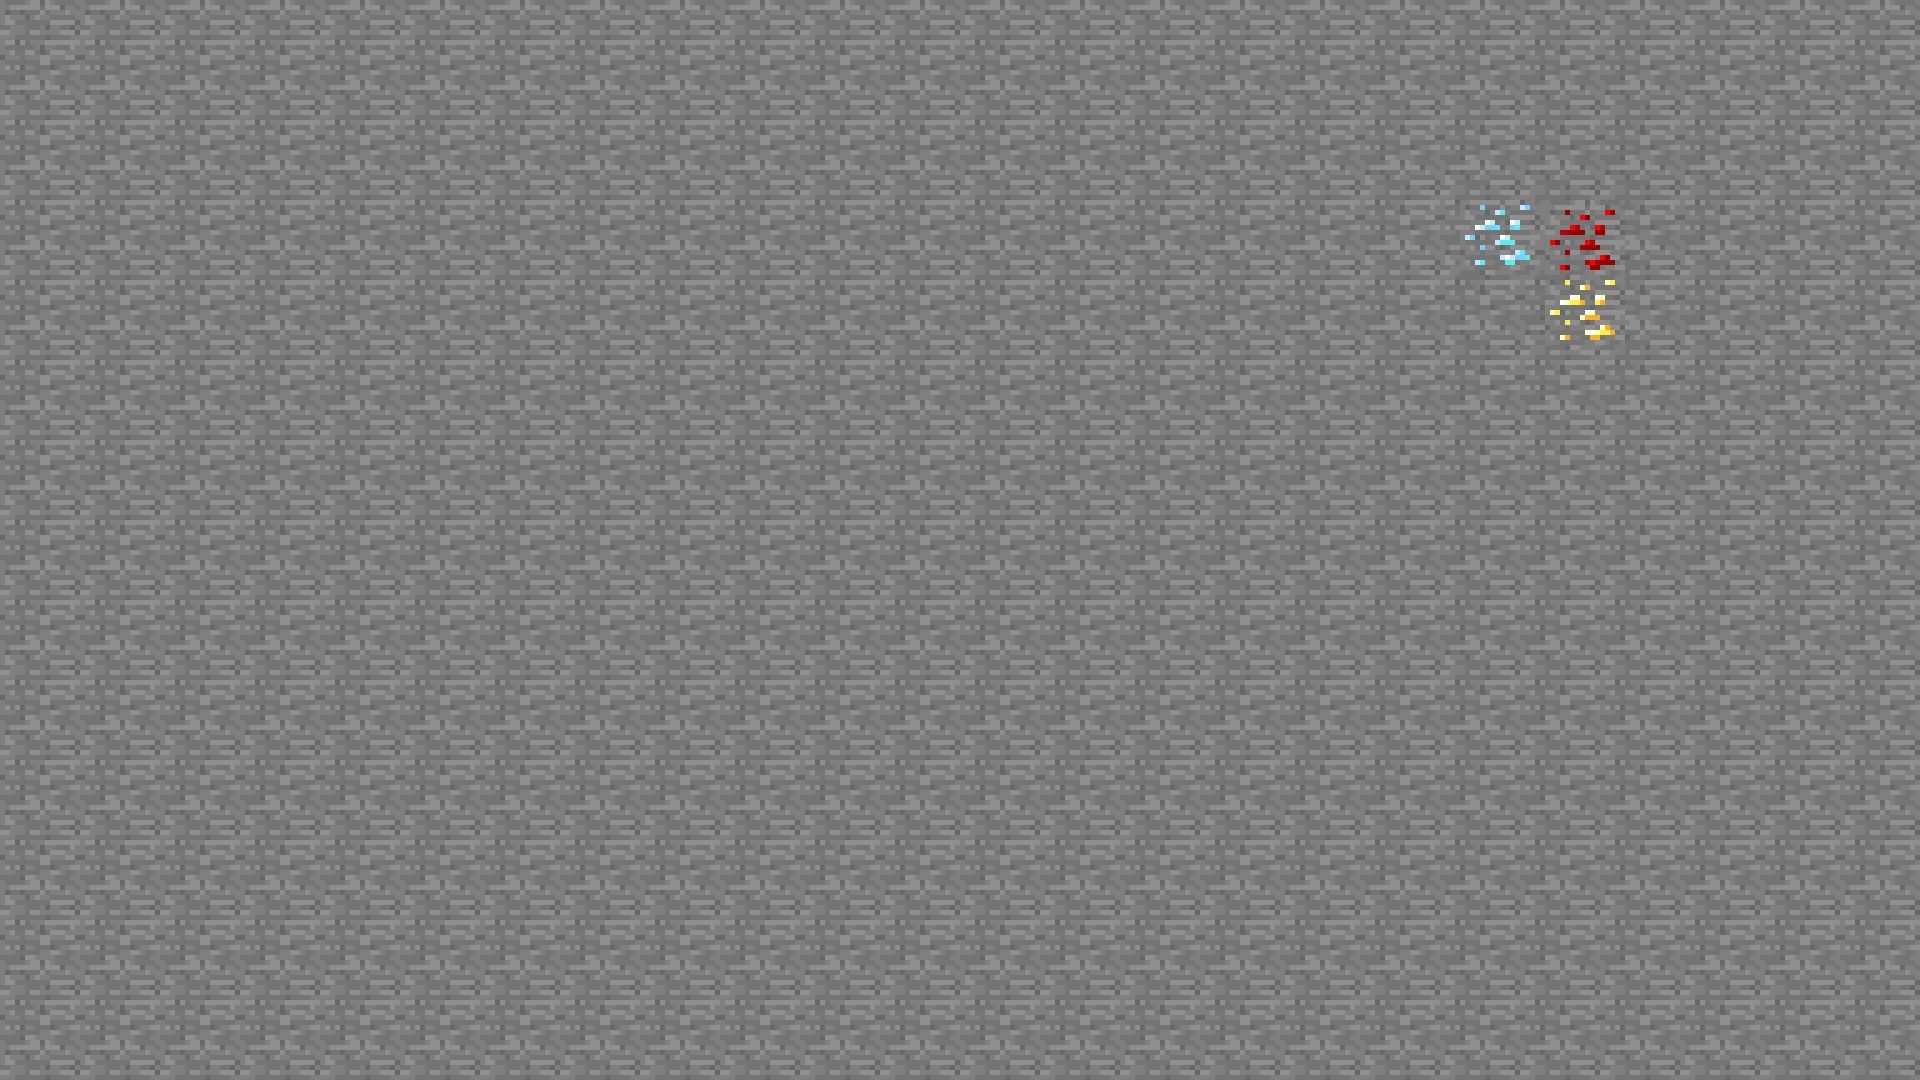 Minecraft Diamond Ore Basic Wallpaper. Minecraft website, Minecraft, Minecraft wallpaper